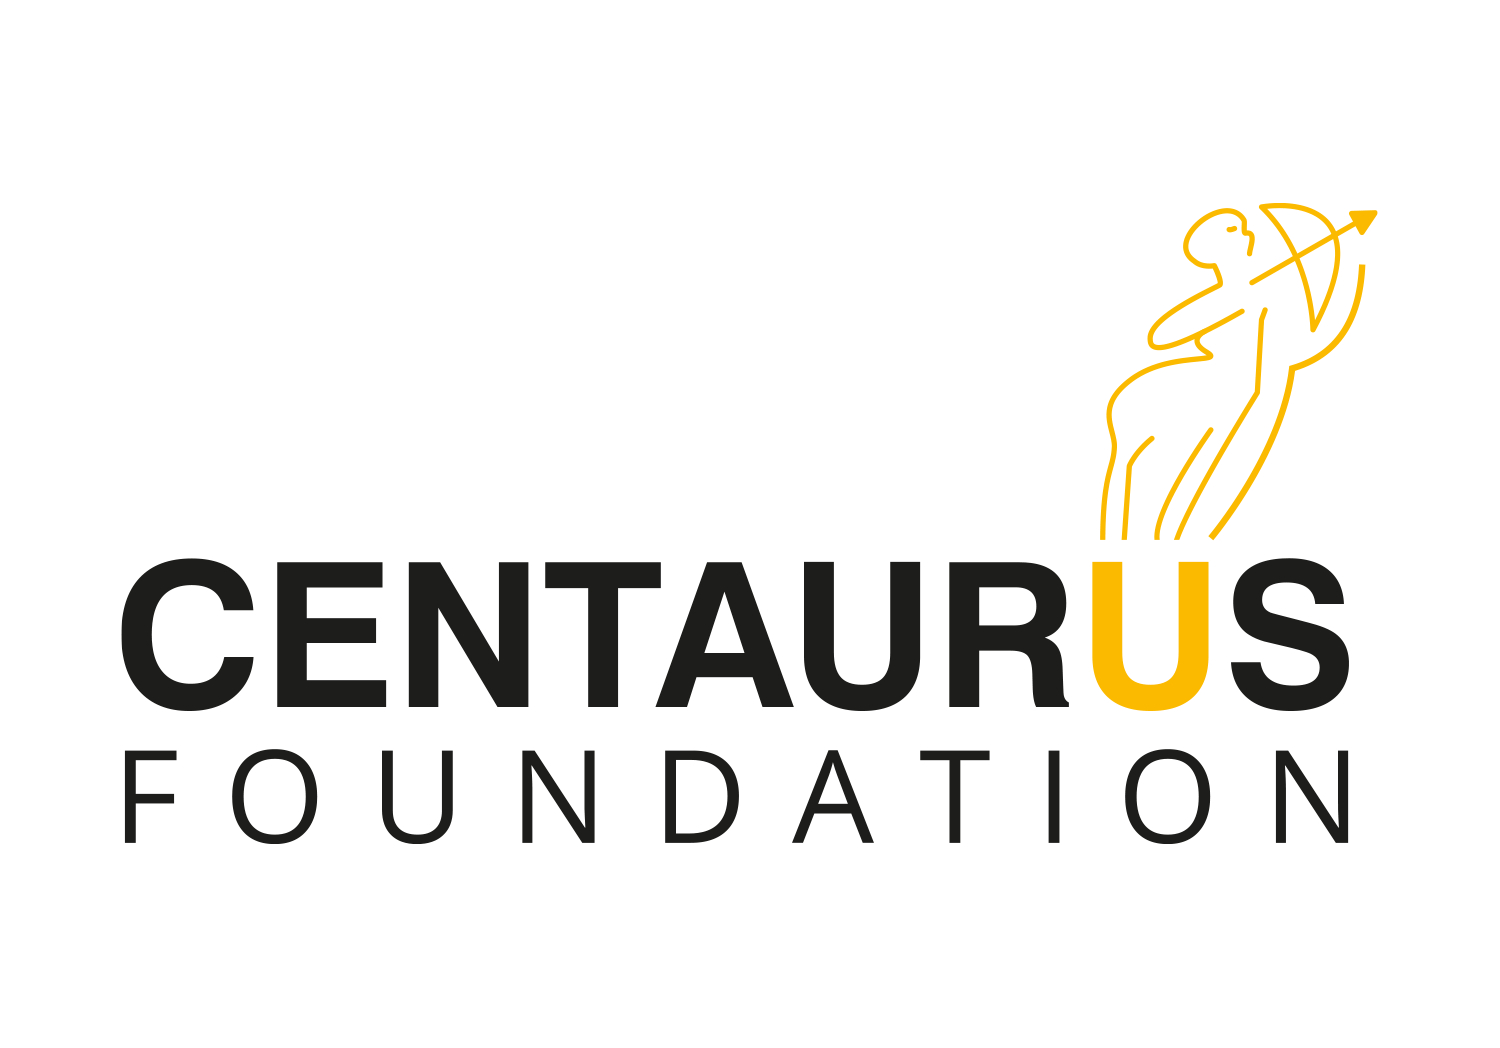 Centaurus Foundation